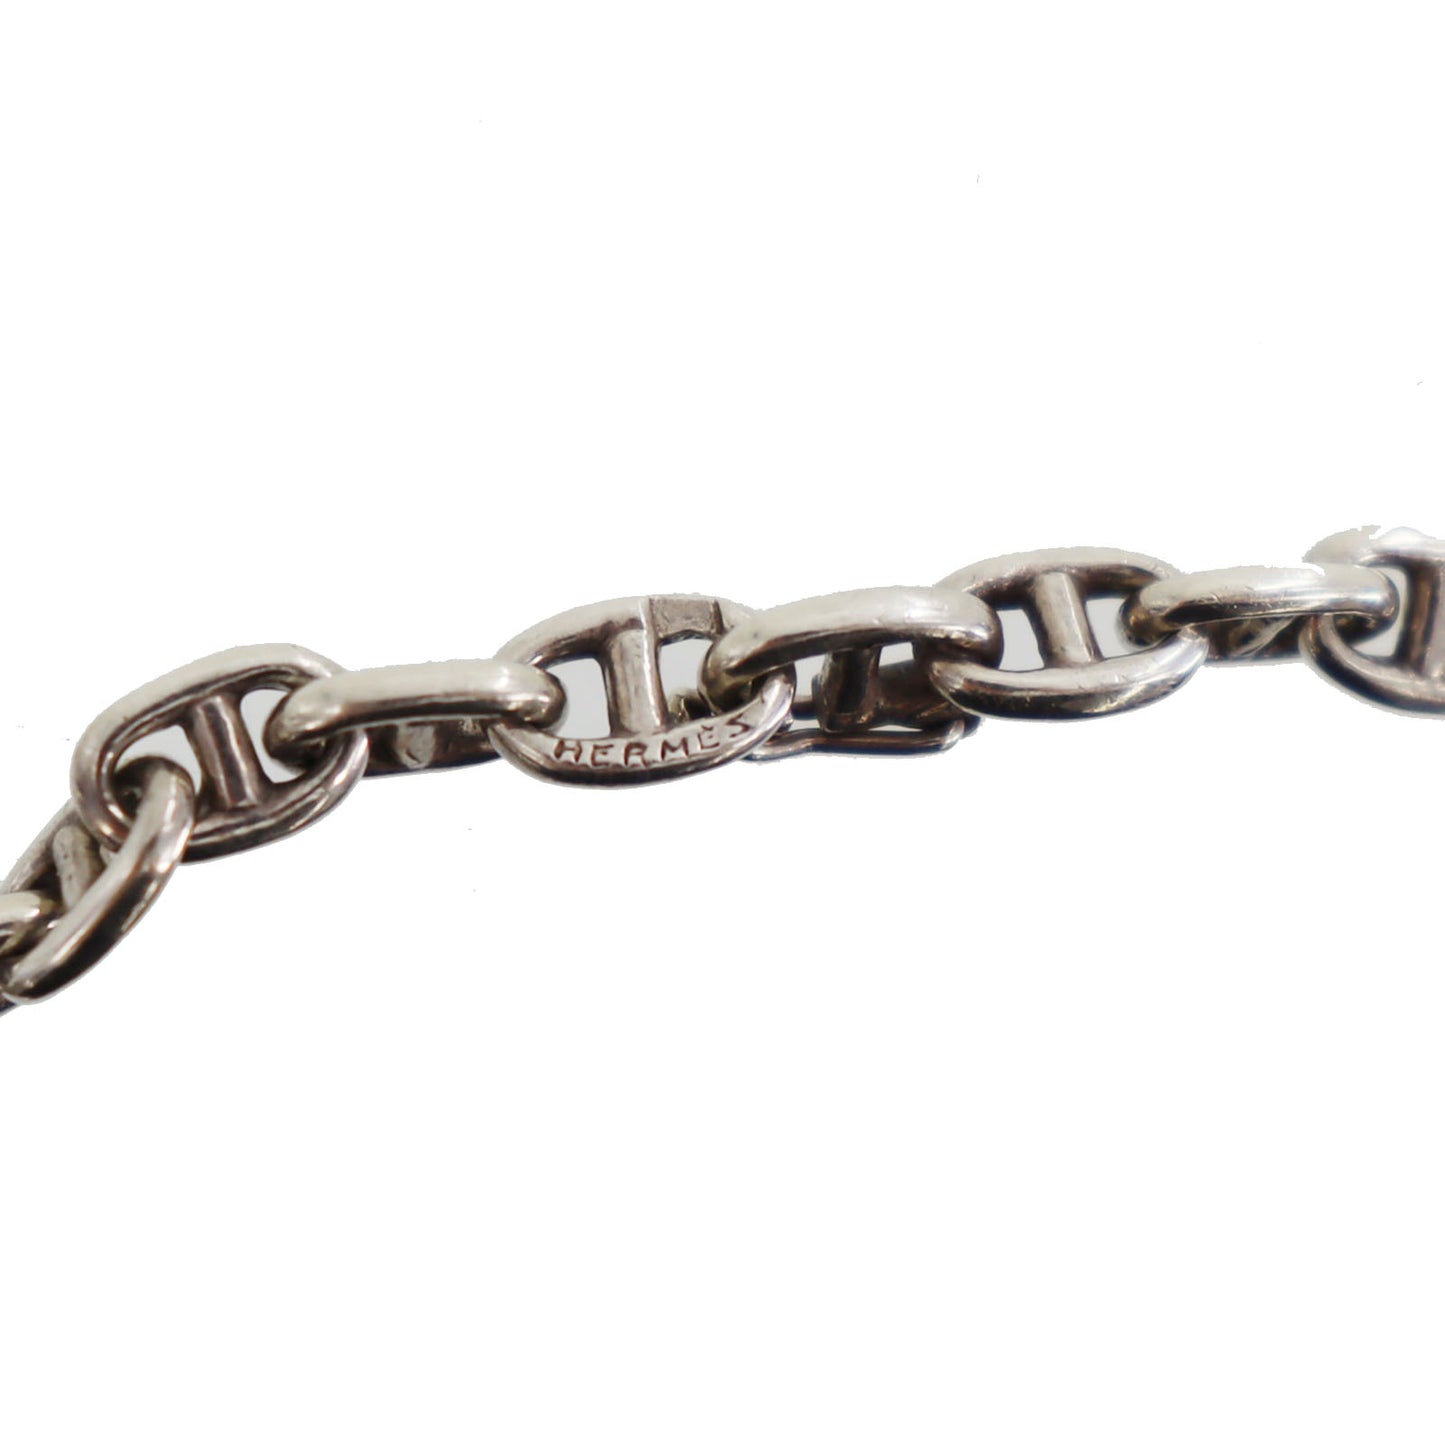 HERMES Chain Bracelet Chaine D'Ancre Silver 925 #CE523